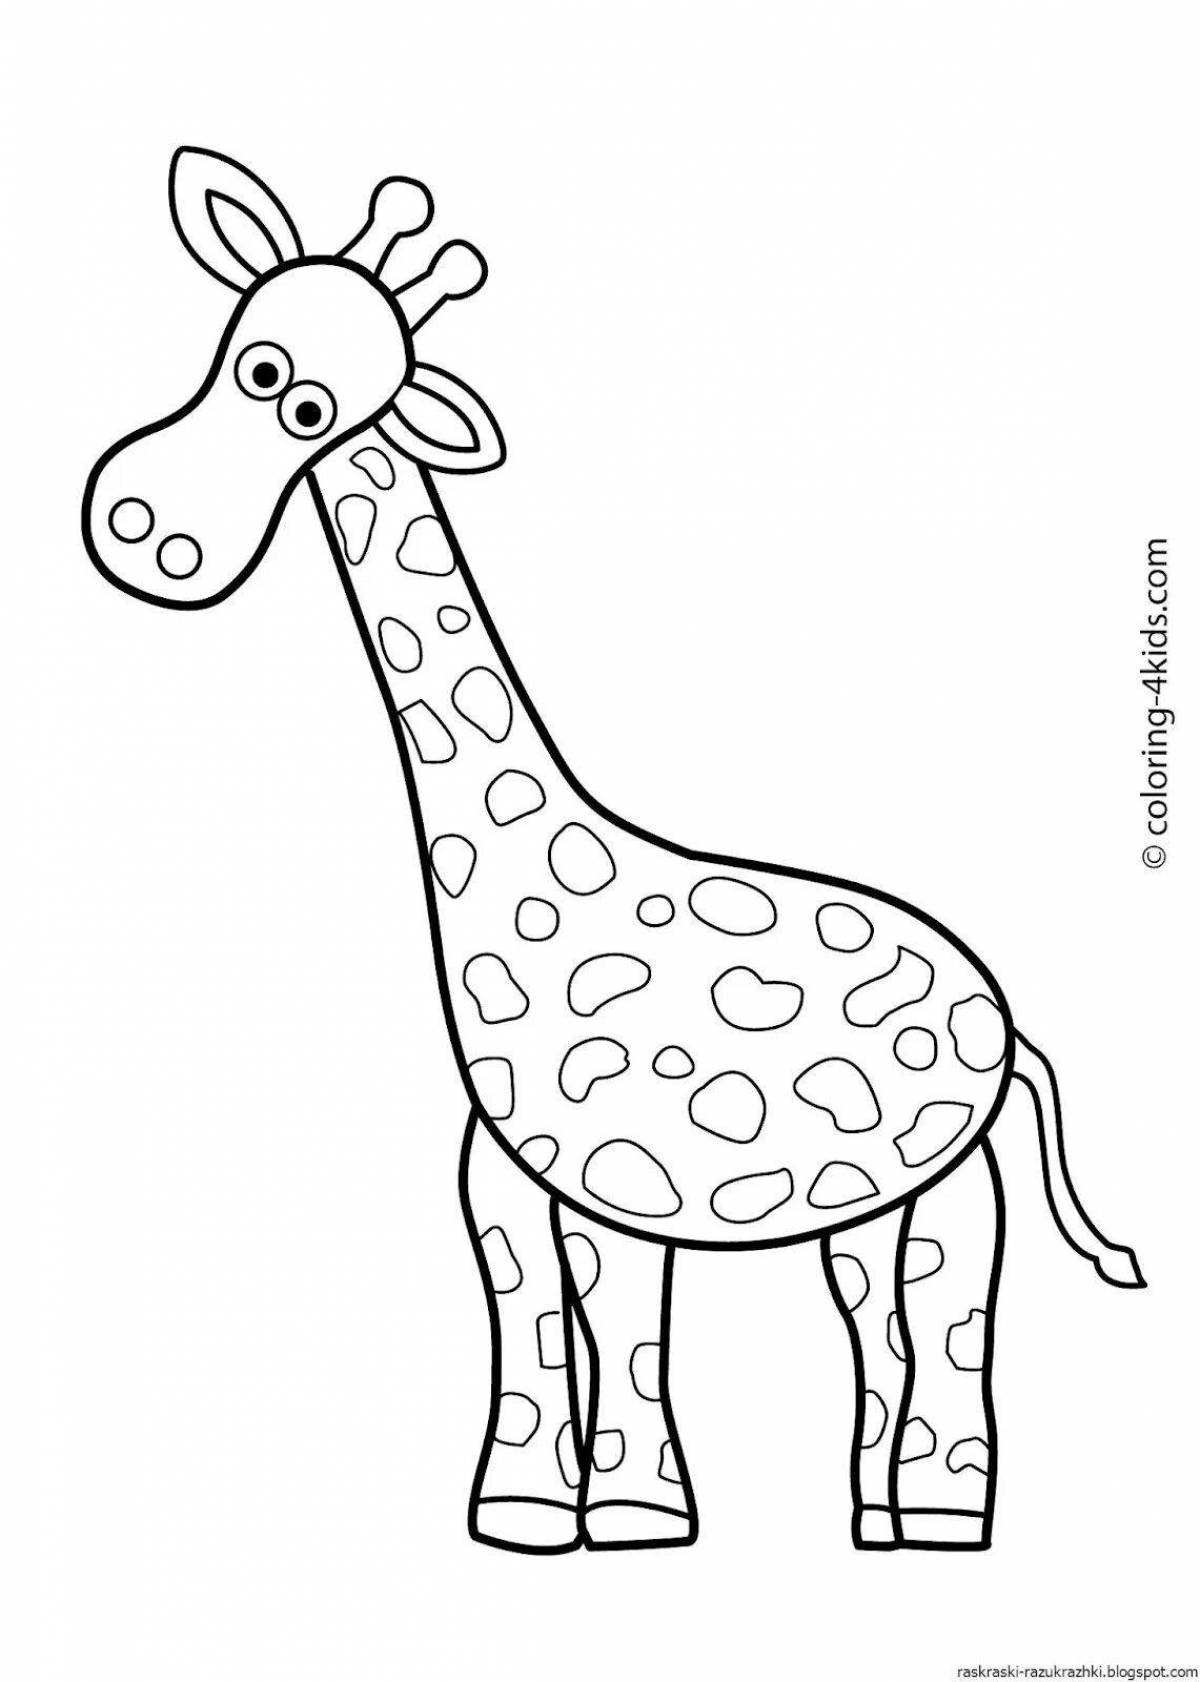 Fun drawing of a giraffe for kids